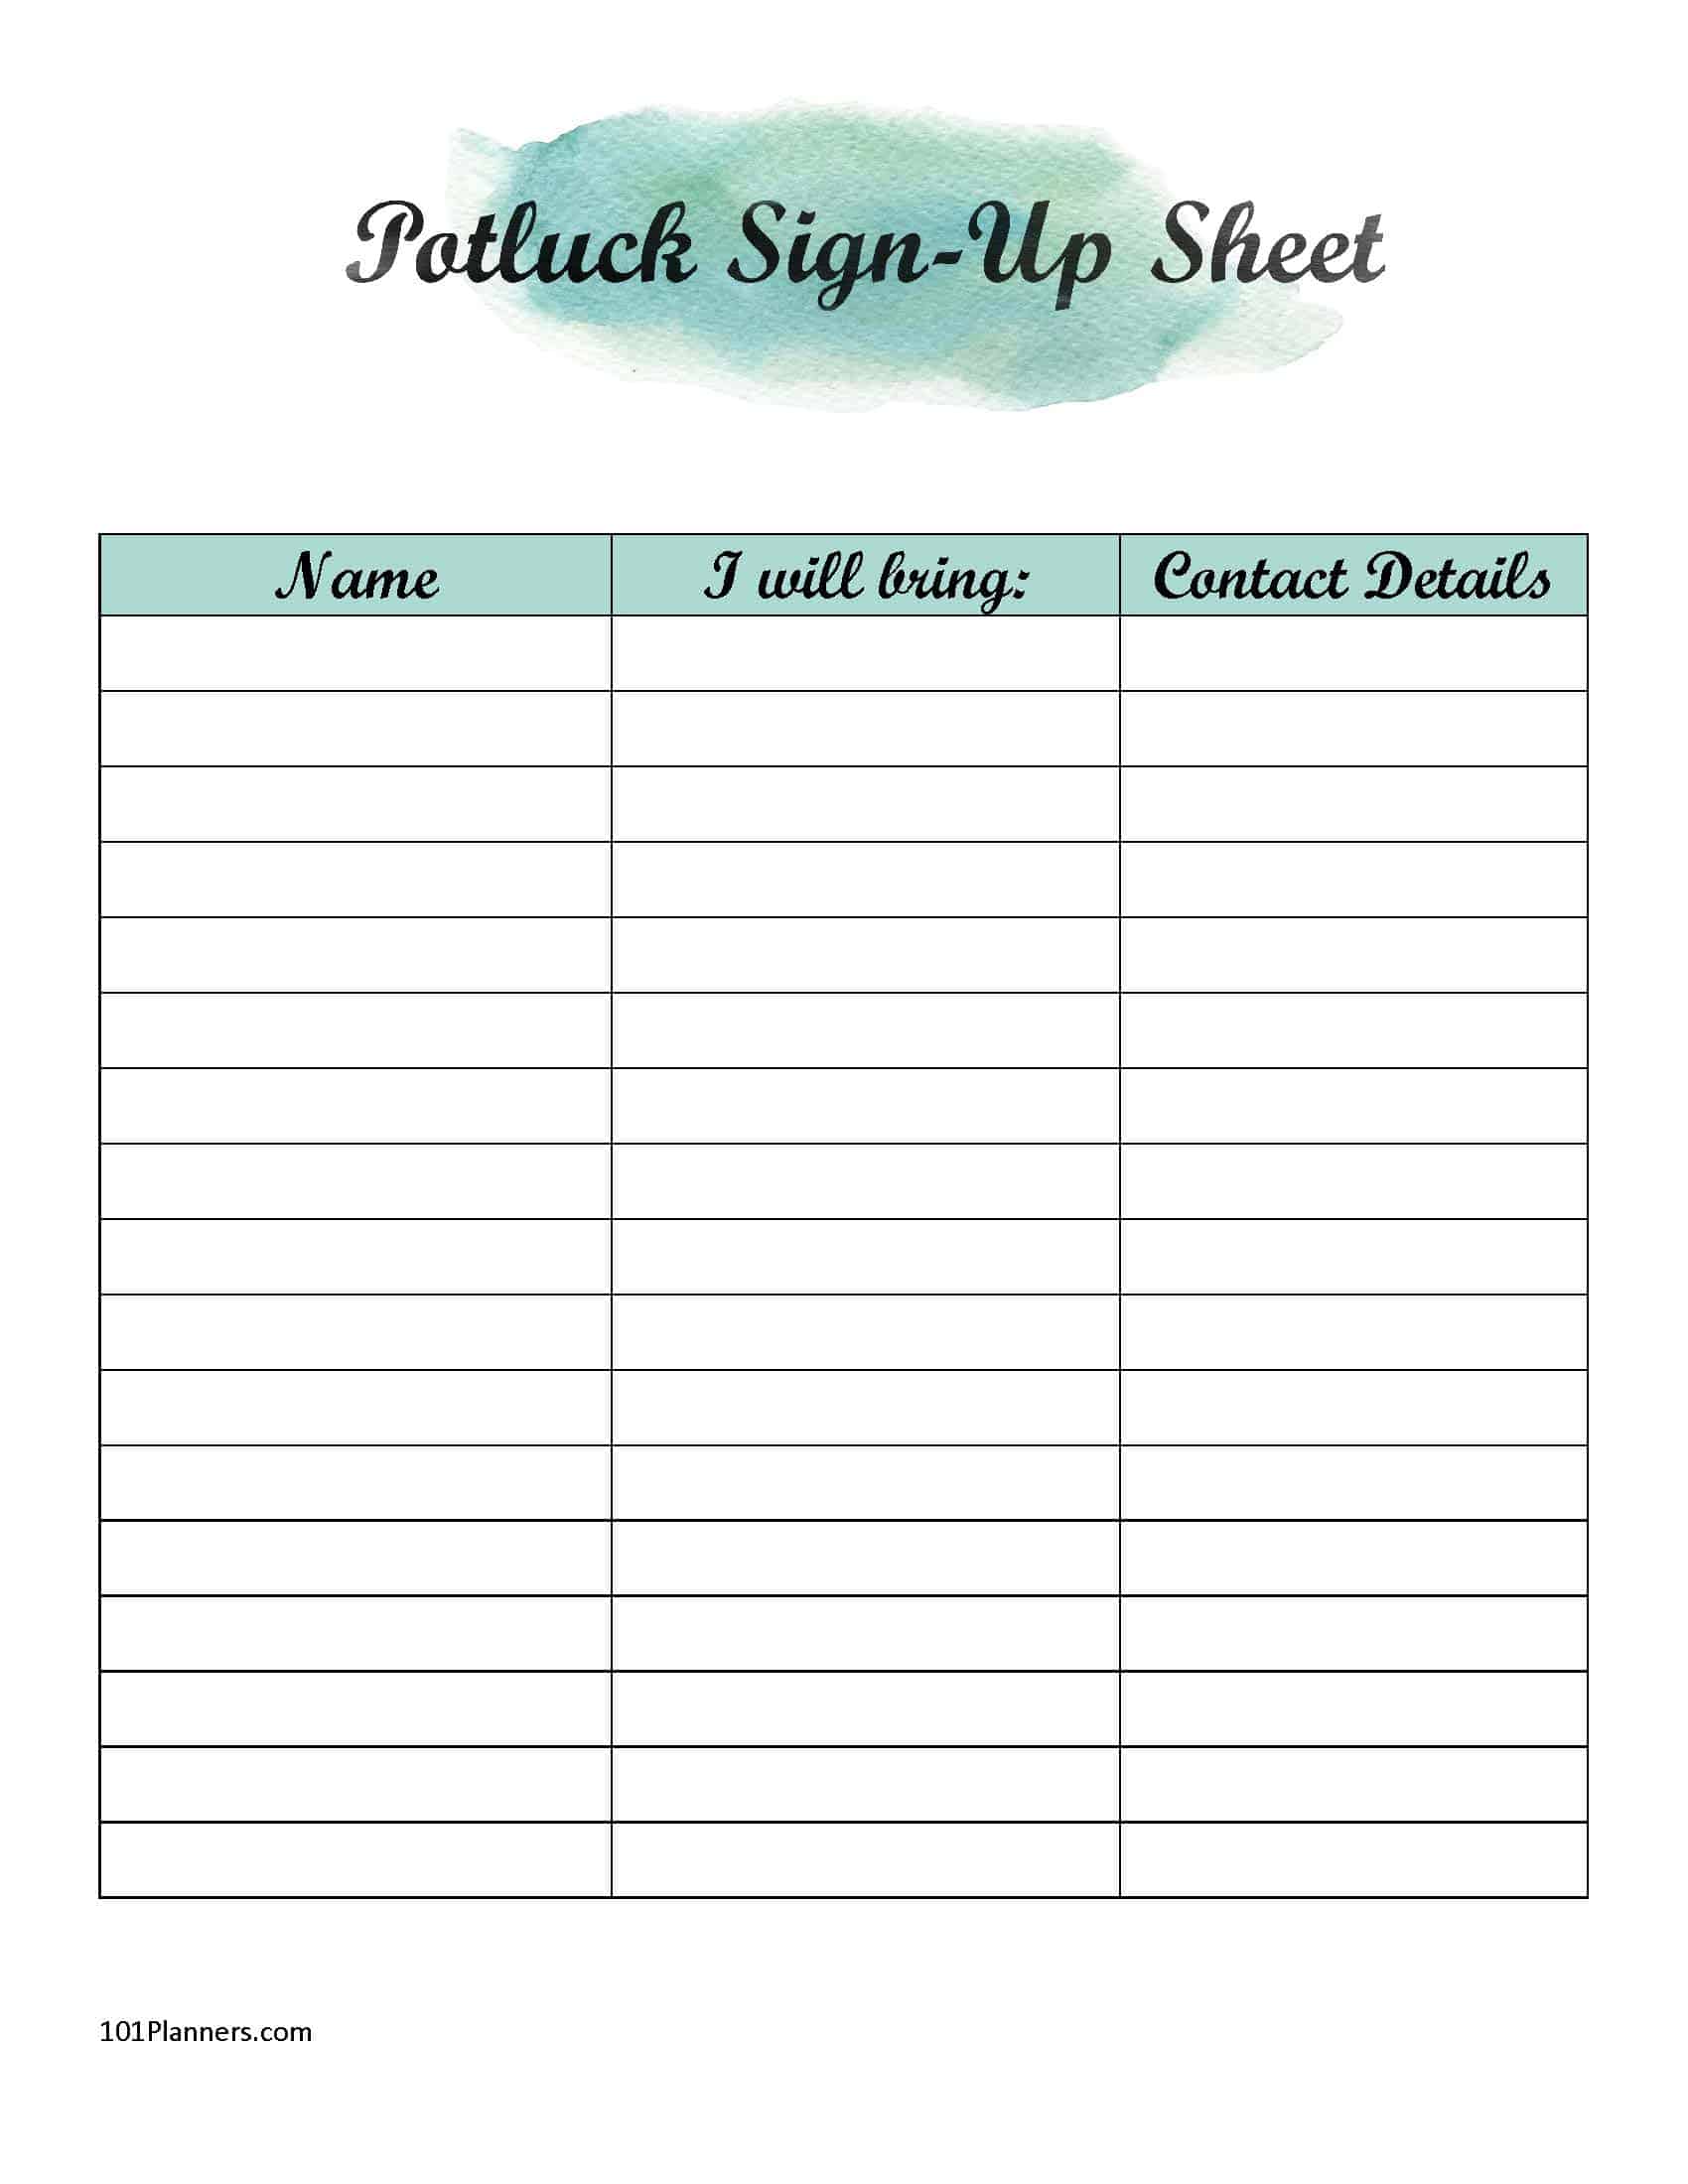 free-printable-potluck-sign-up-sheet-template-word-printable-templates